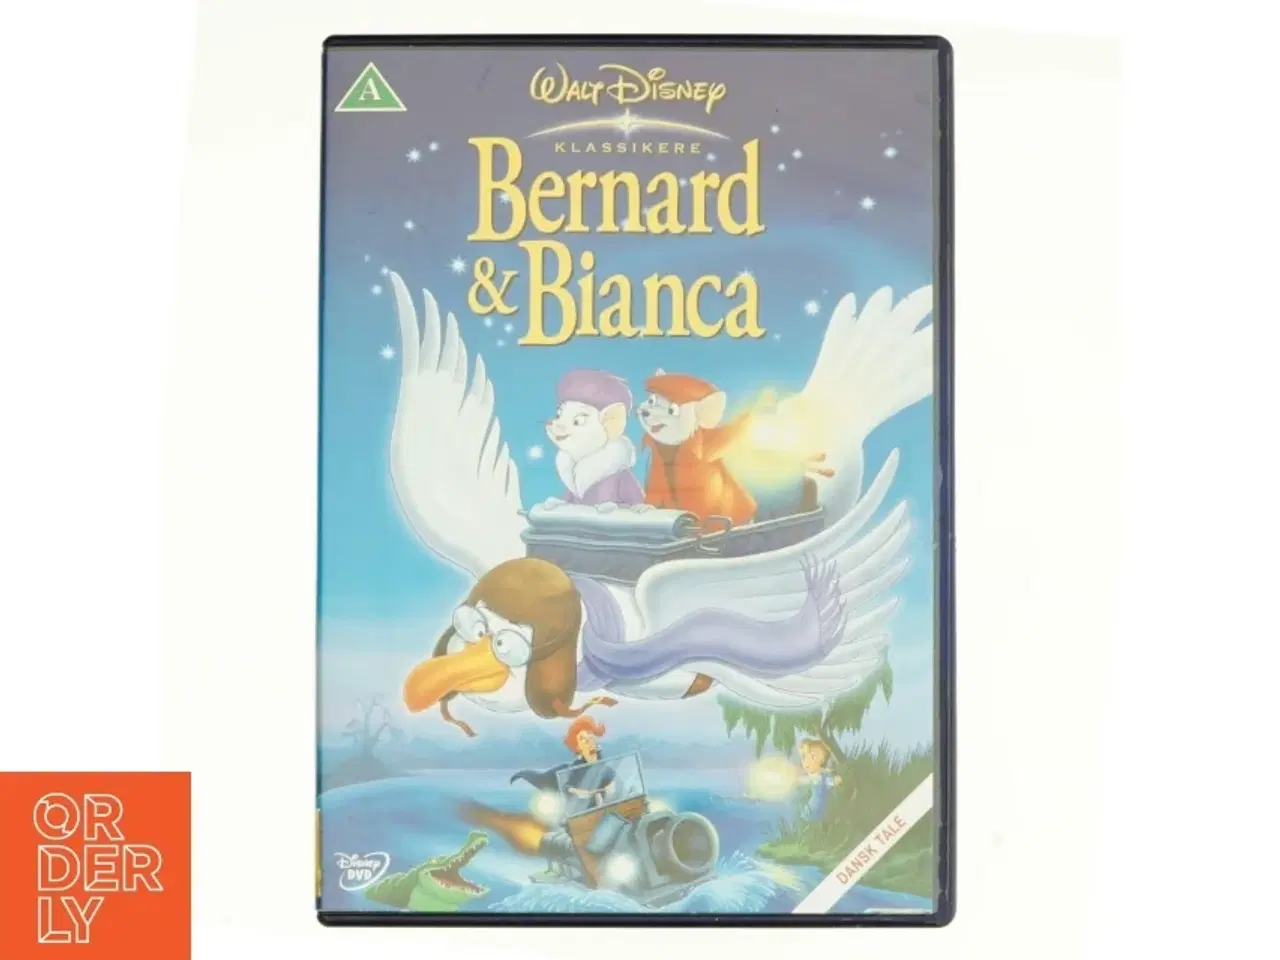 Billede 1 - Bernhard & Bianca fra Walt Disney